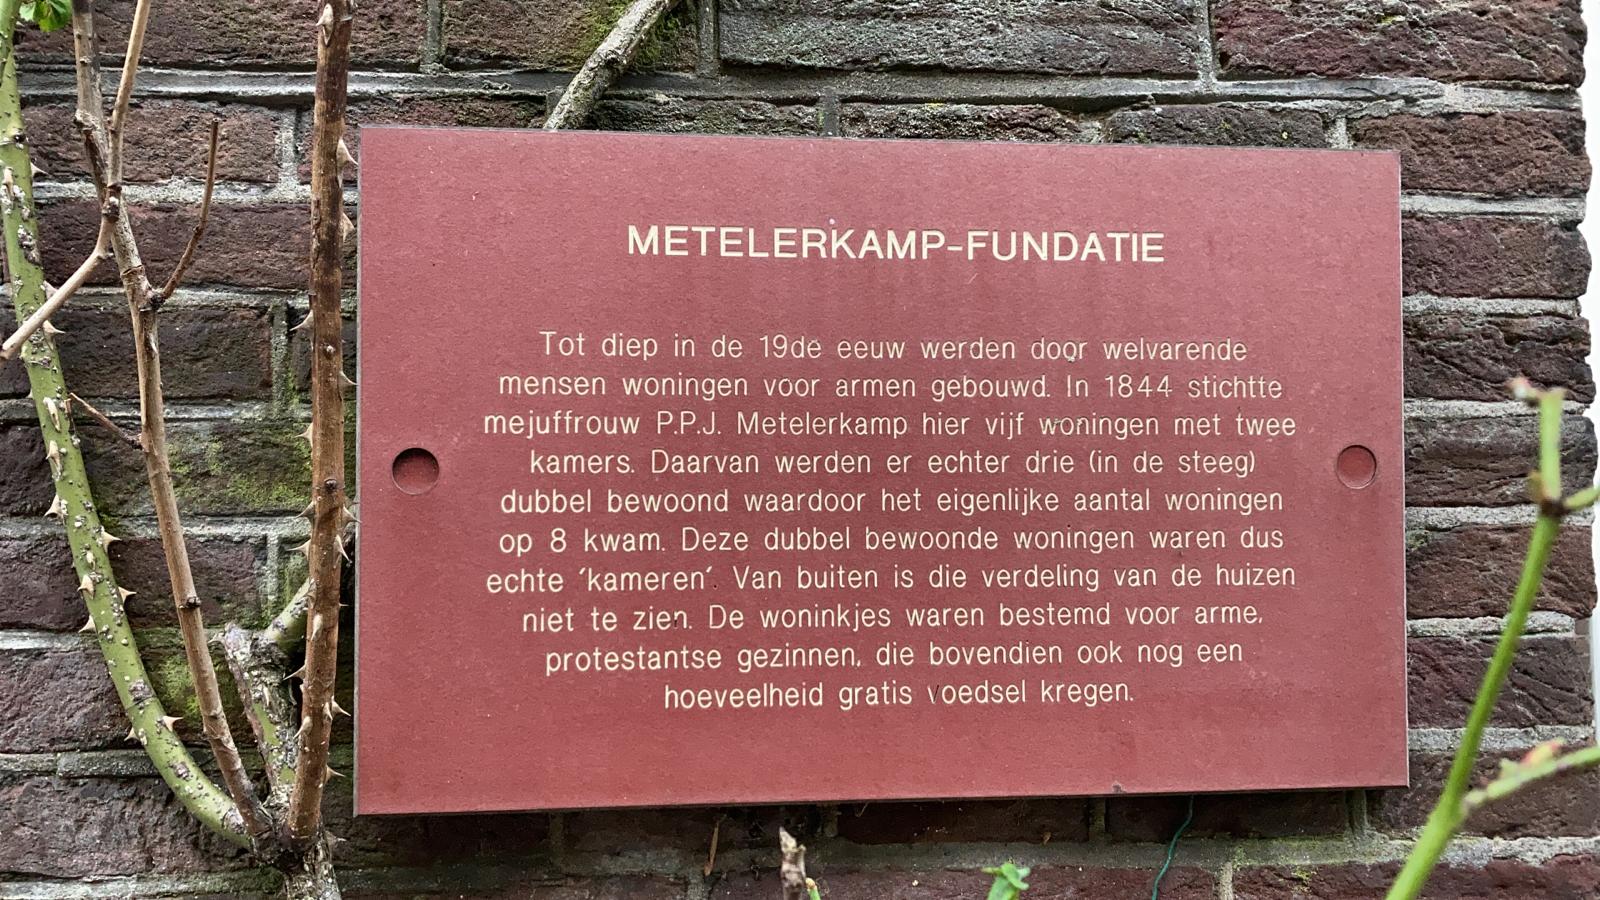 Metelerkamp Foundation